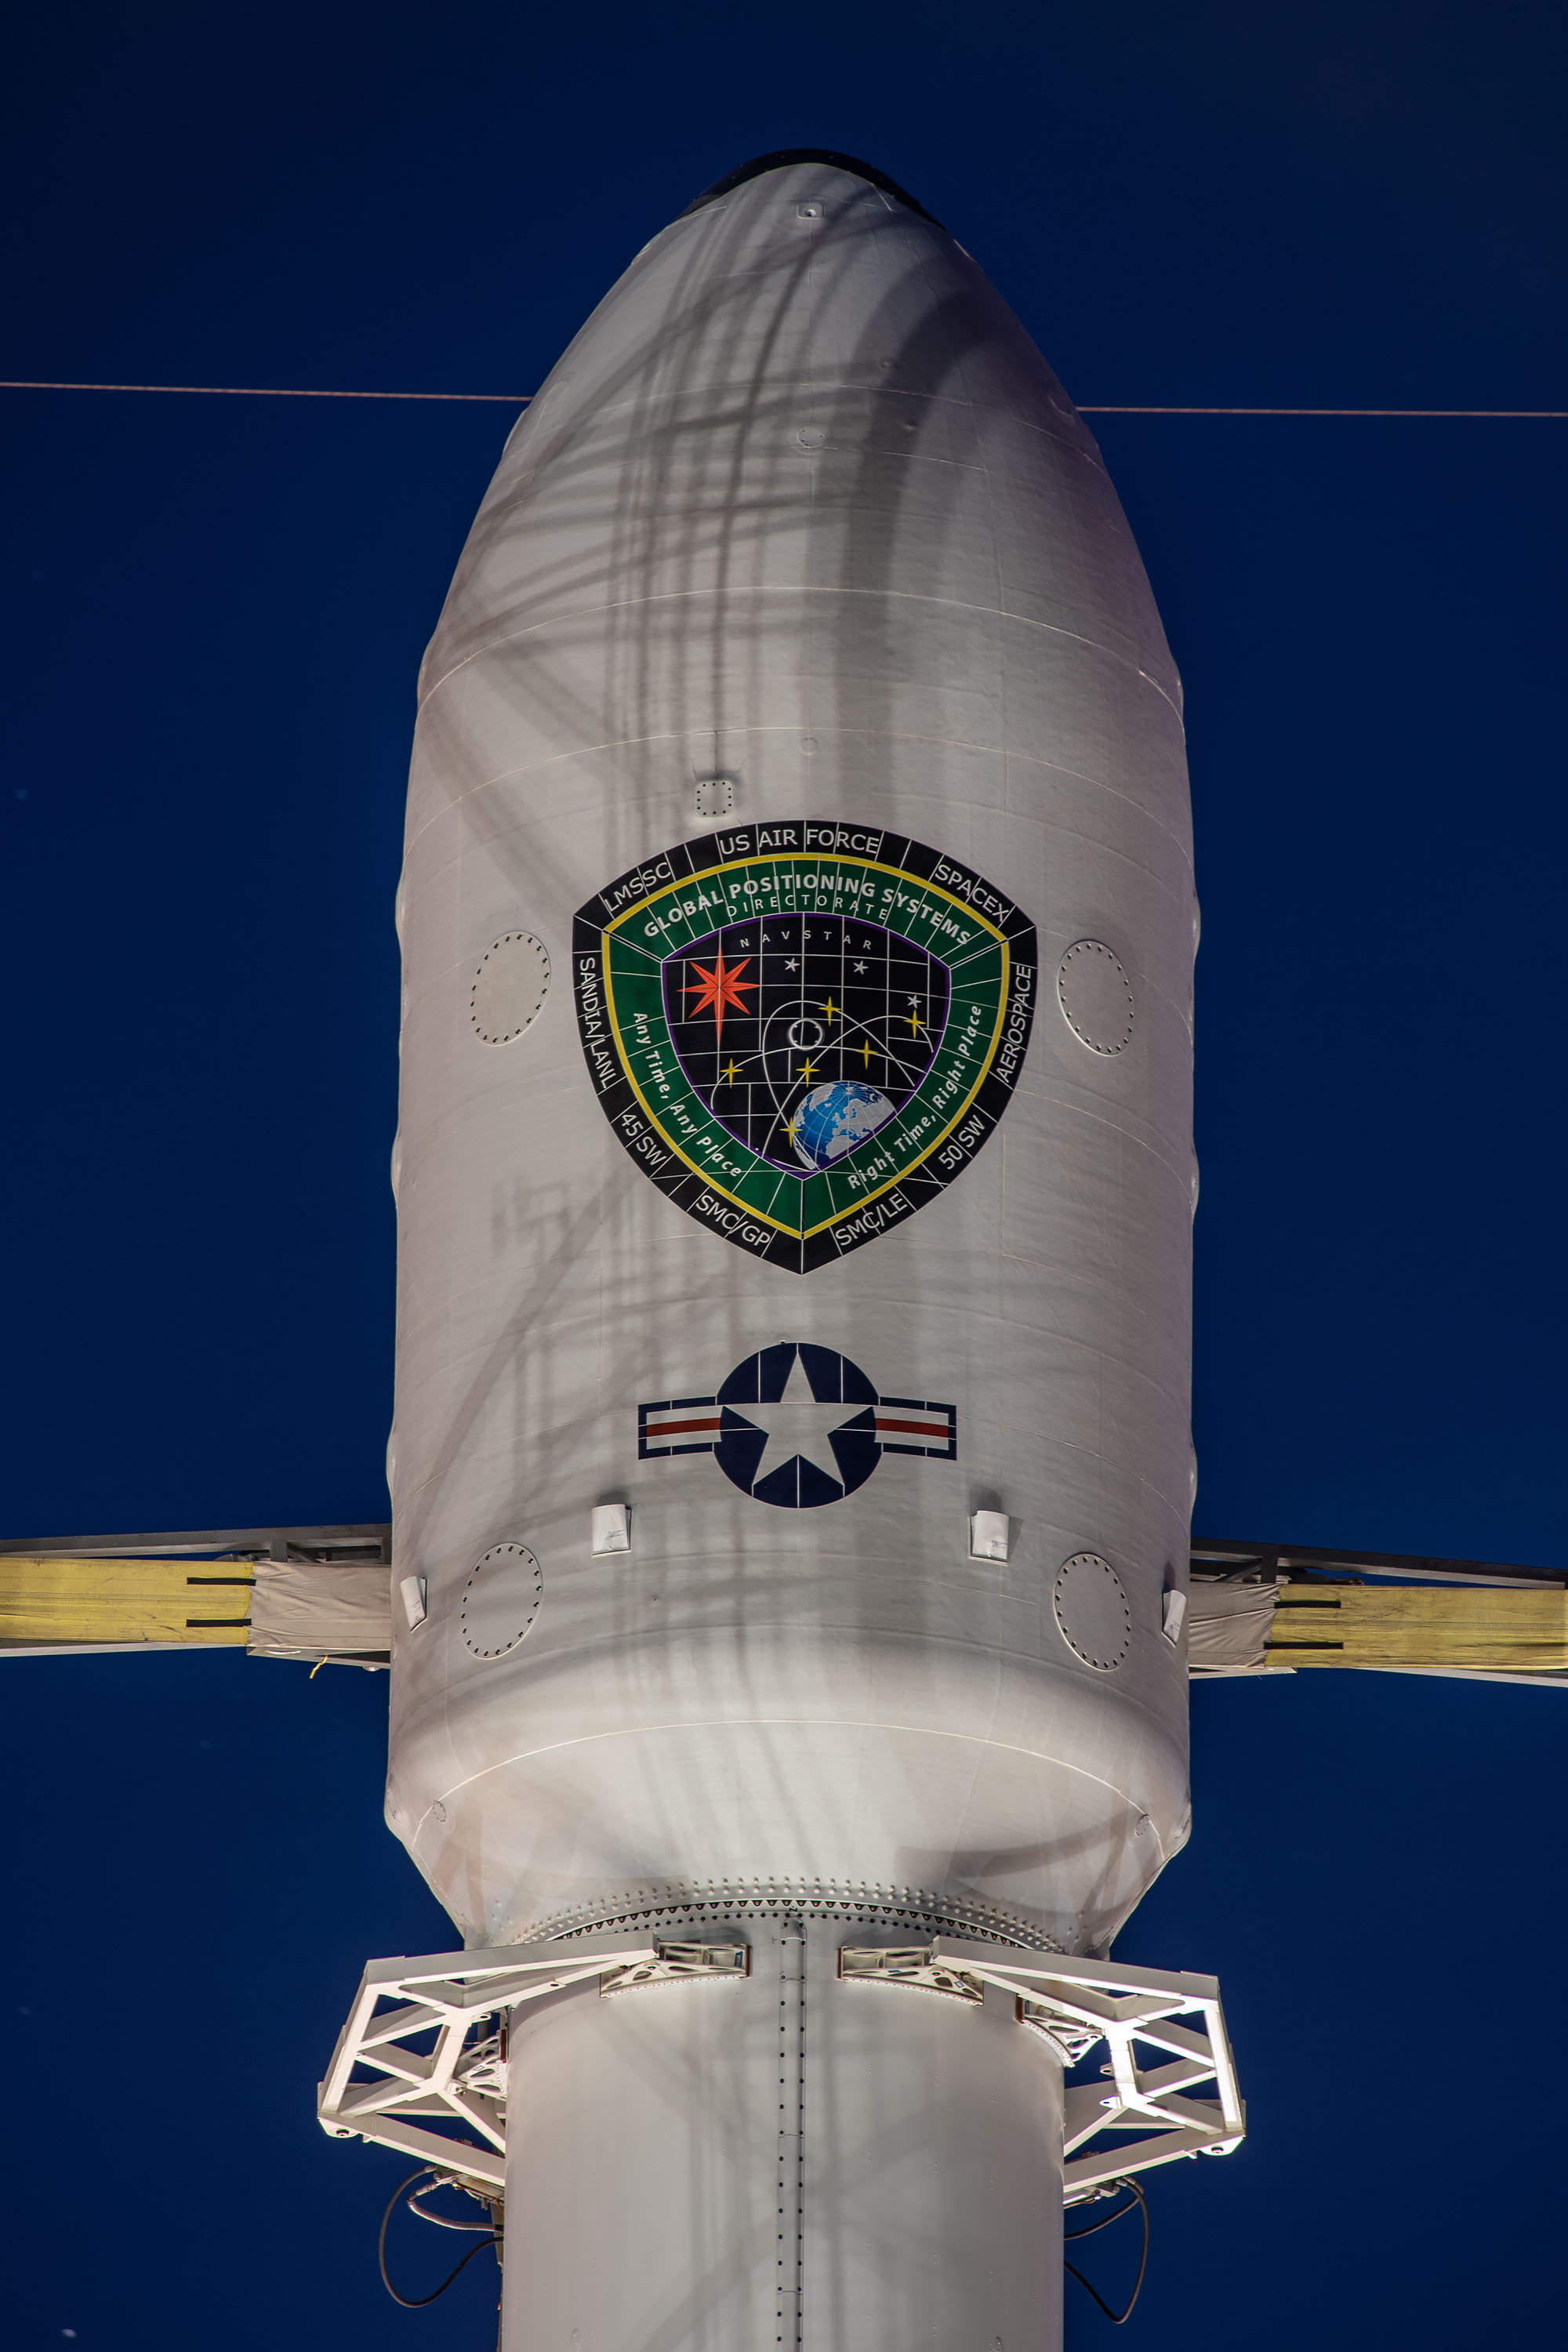 Falcon 9 GPS III SV01